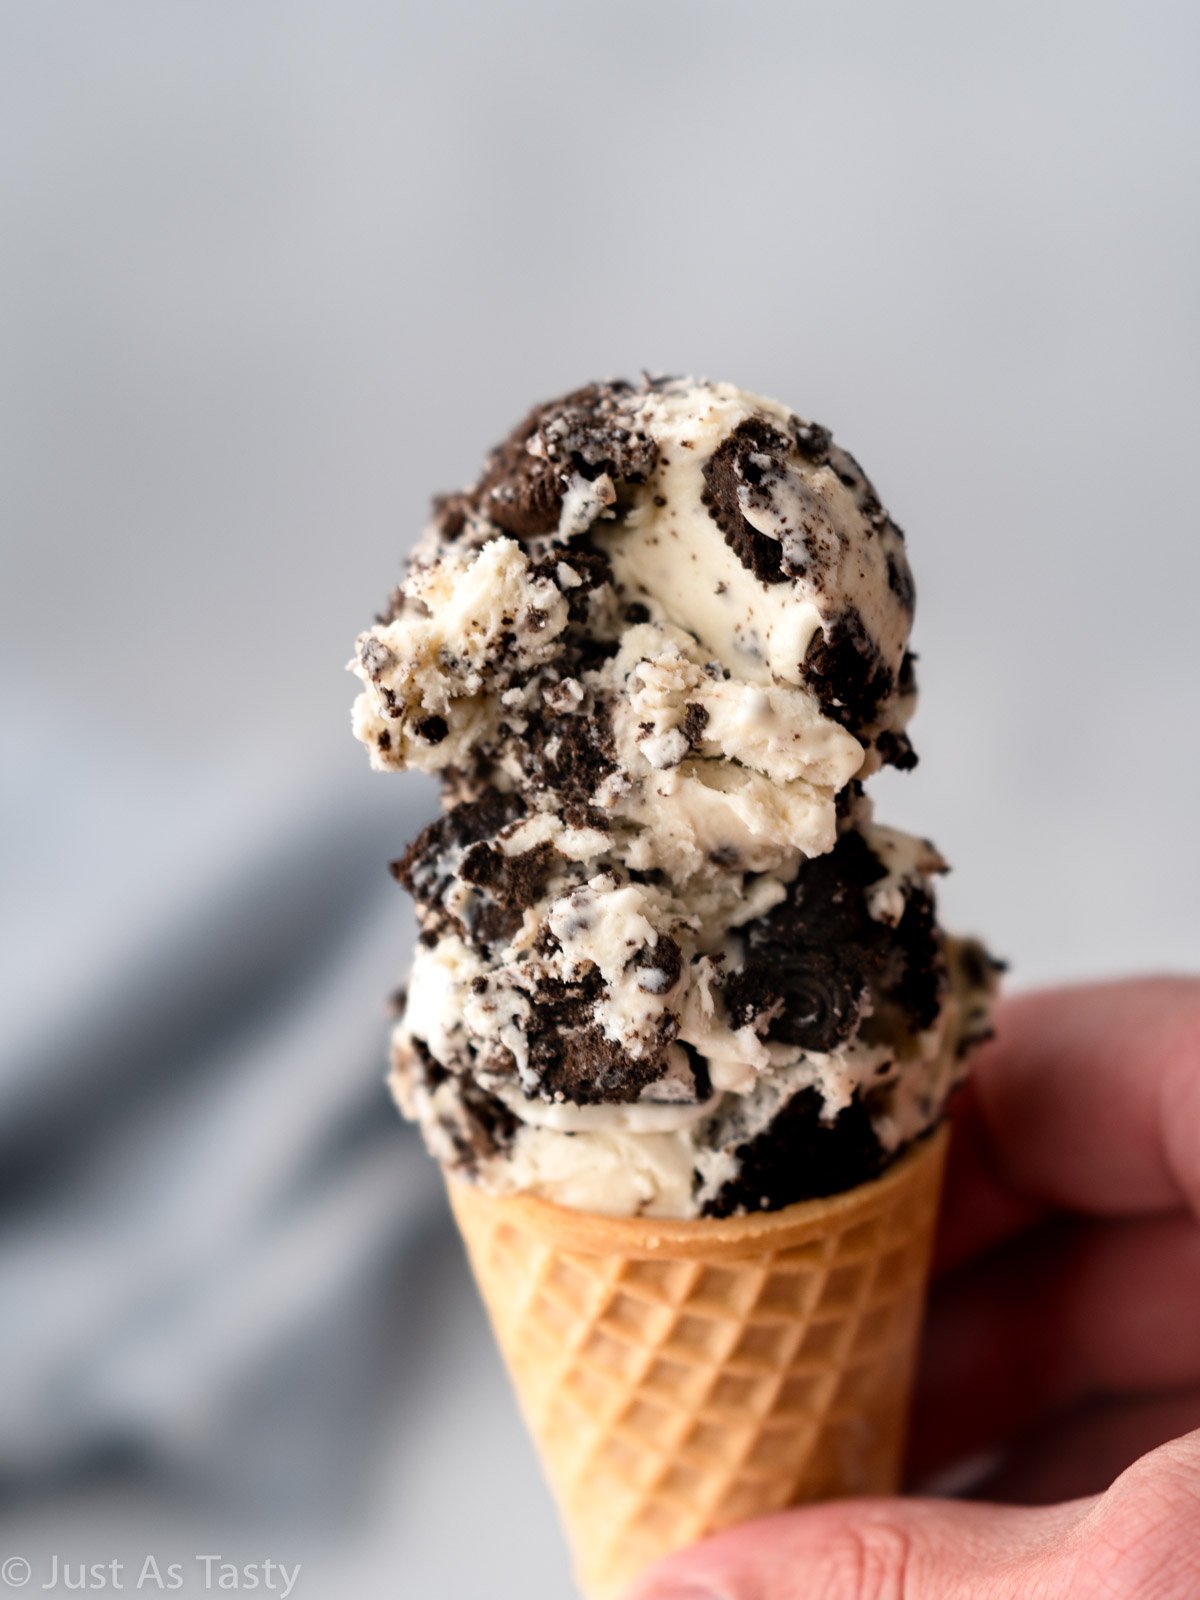 Close-up of a scoop of Oreo ice cream.